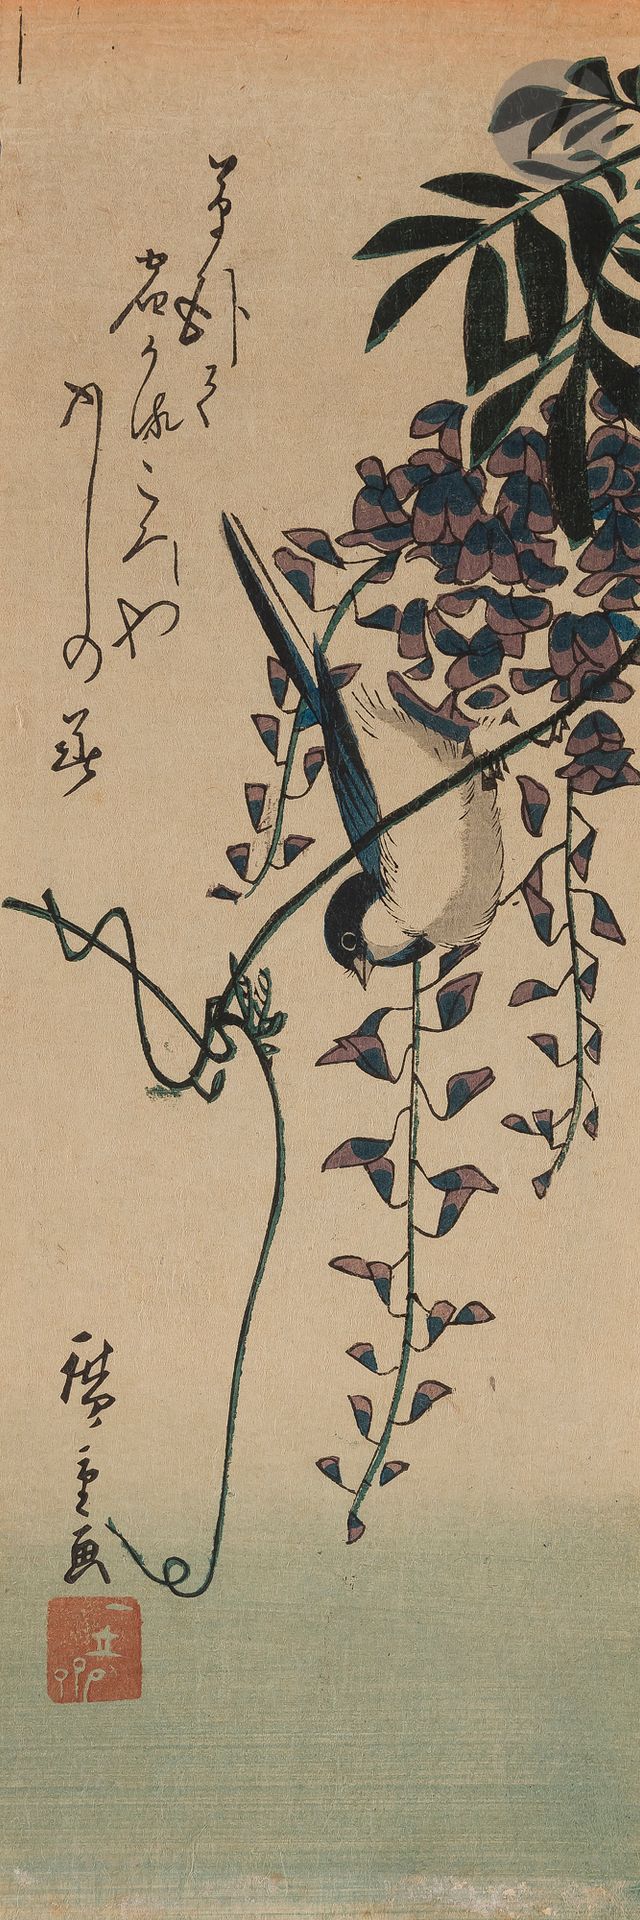 Null 宇多川广重（1797-1858），日本，约
1835/1845西池e
版画
，纸上墨和多色，ai tanzaku格式。一只小鸟在成串的紫藤花fuji &hellip;